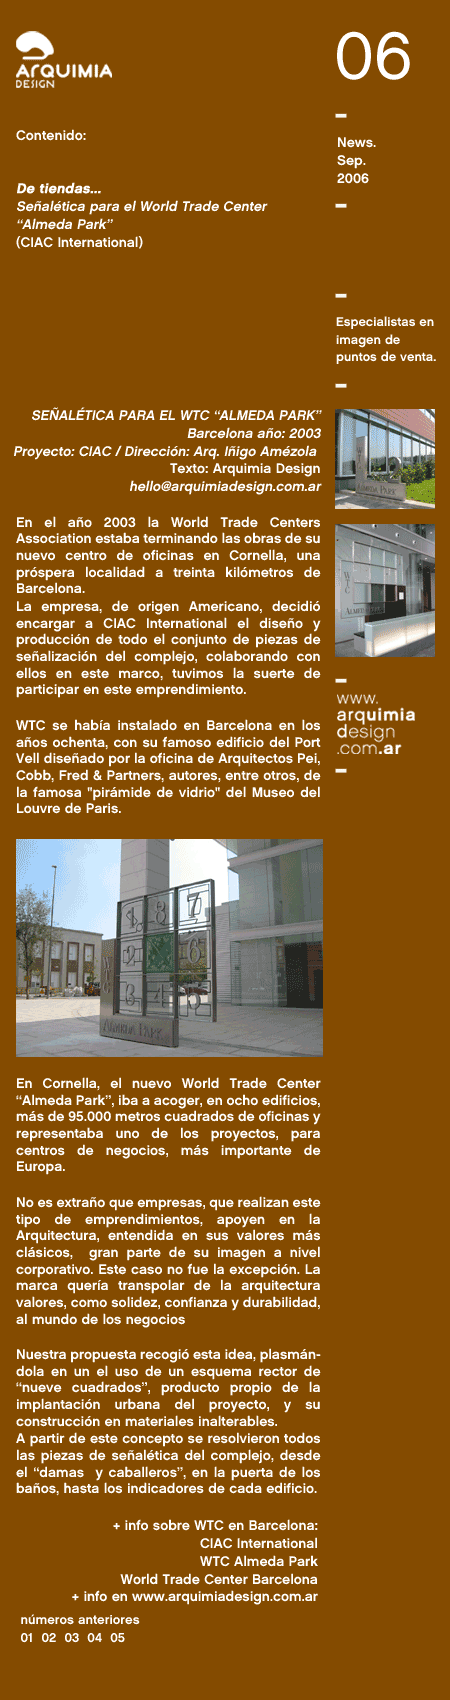 Arquimia News 06